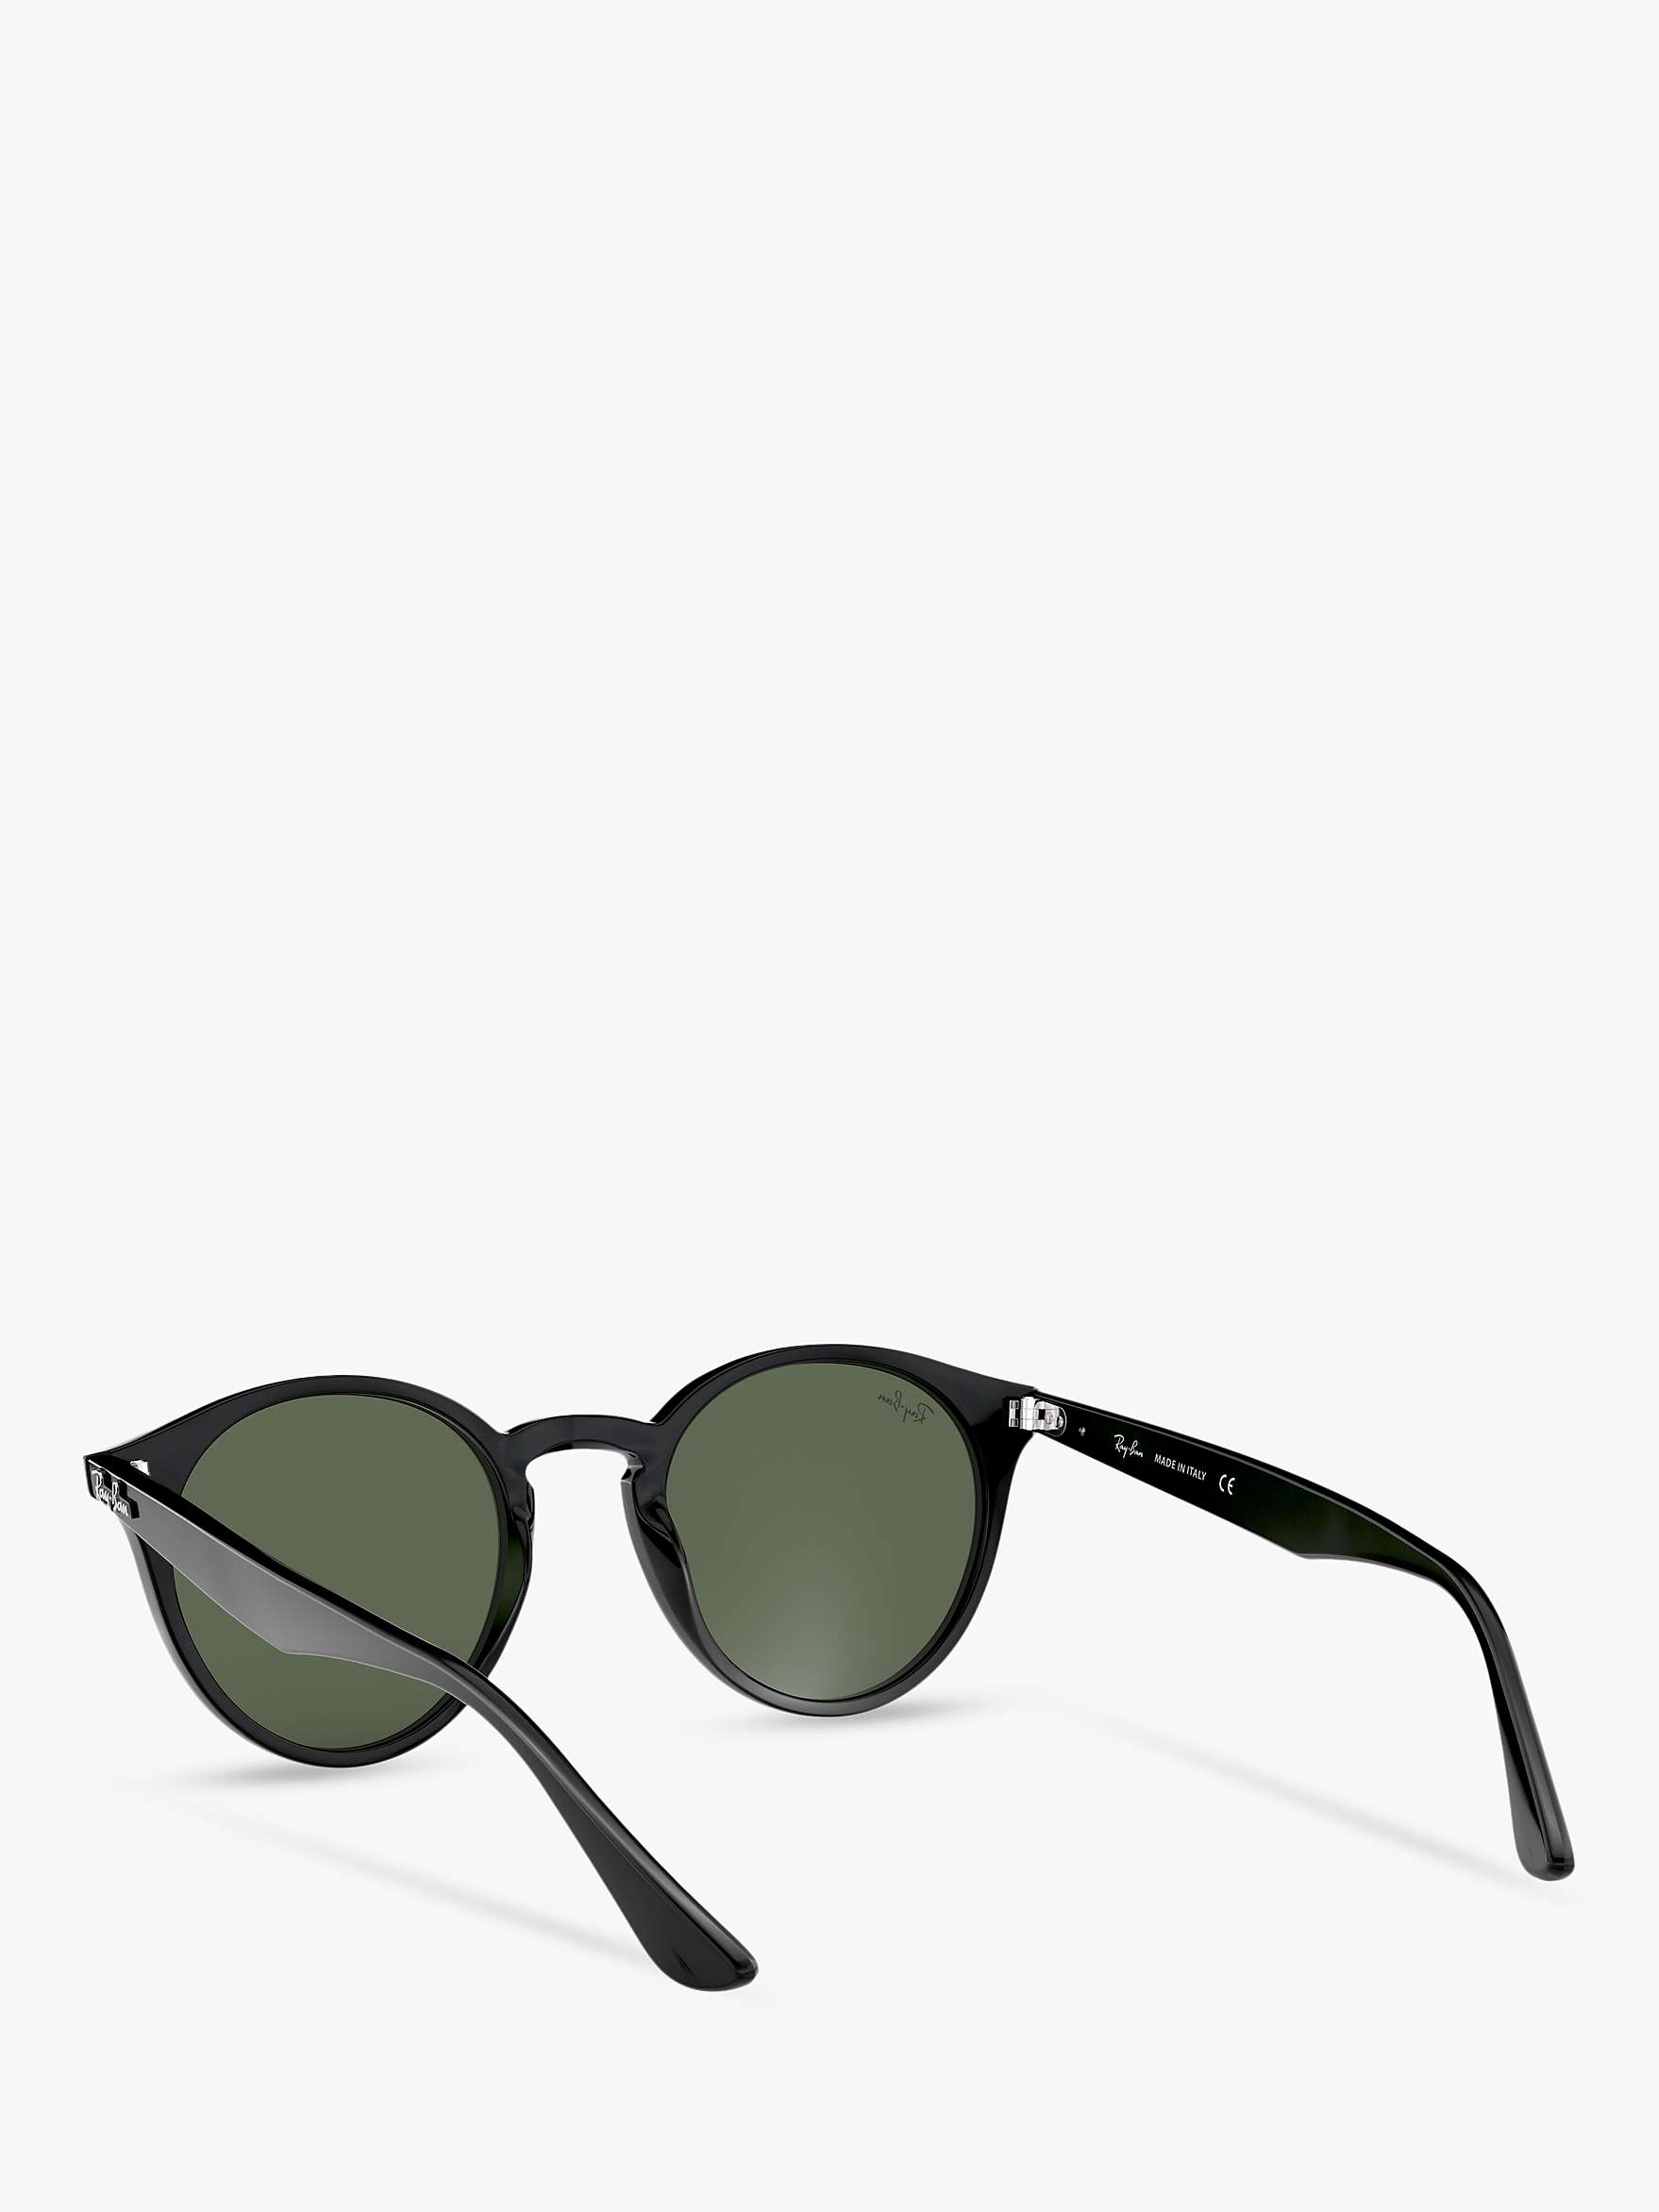 Buy Ray-Ban RB2180 Men's Round Framed Sunglasses, Black/Grey Gradient Online at johnlewis.com